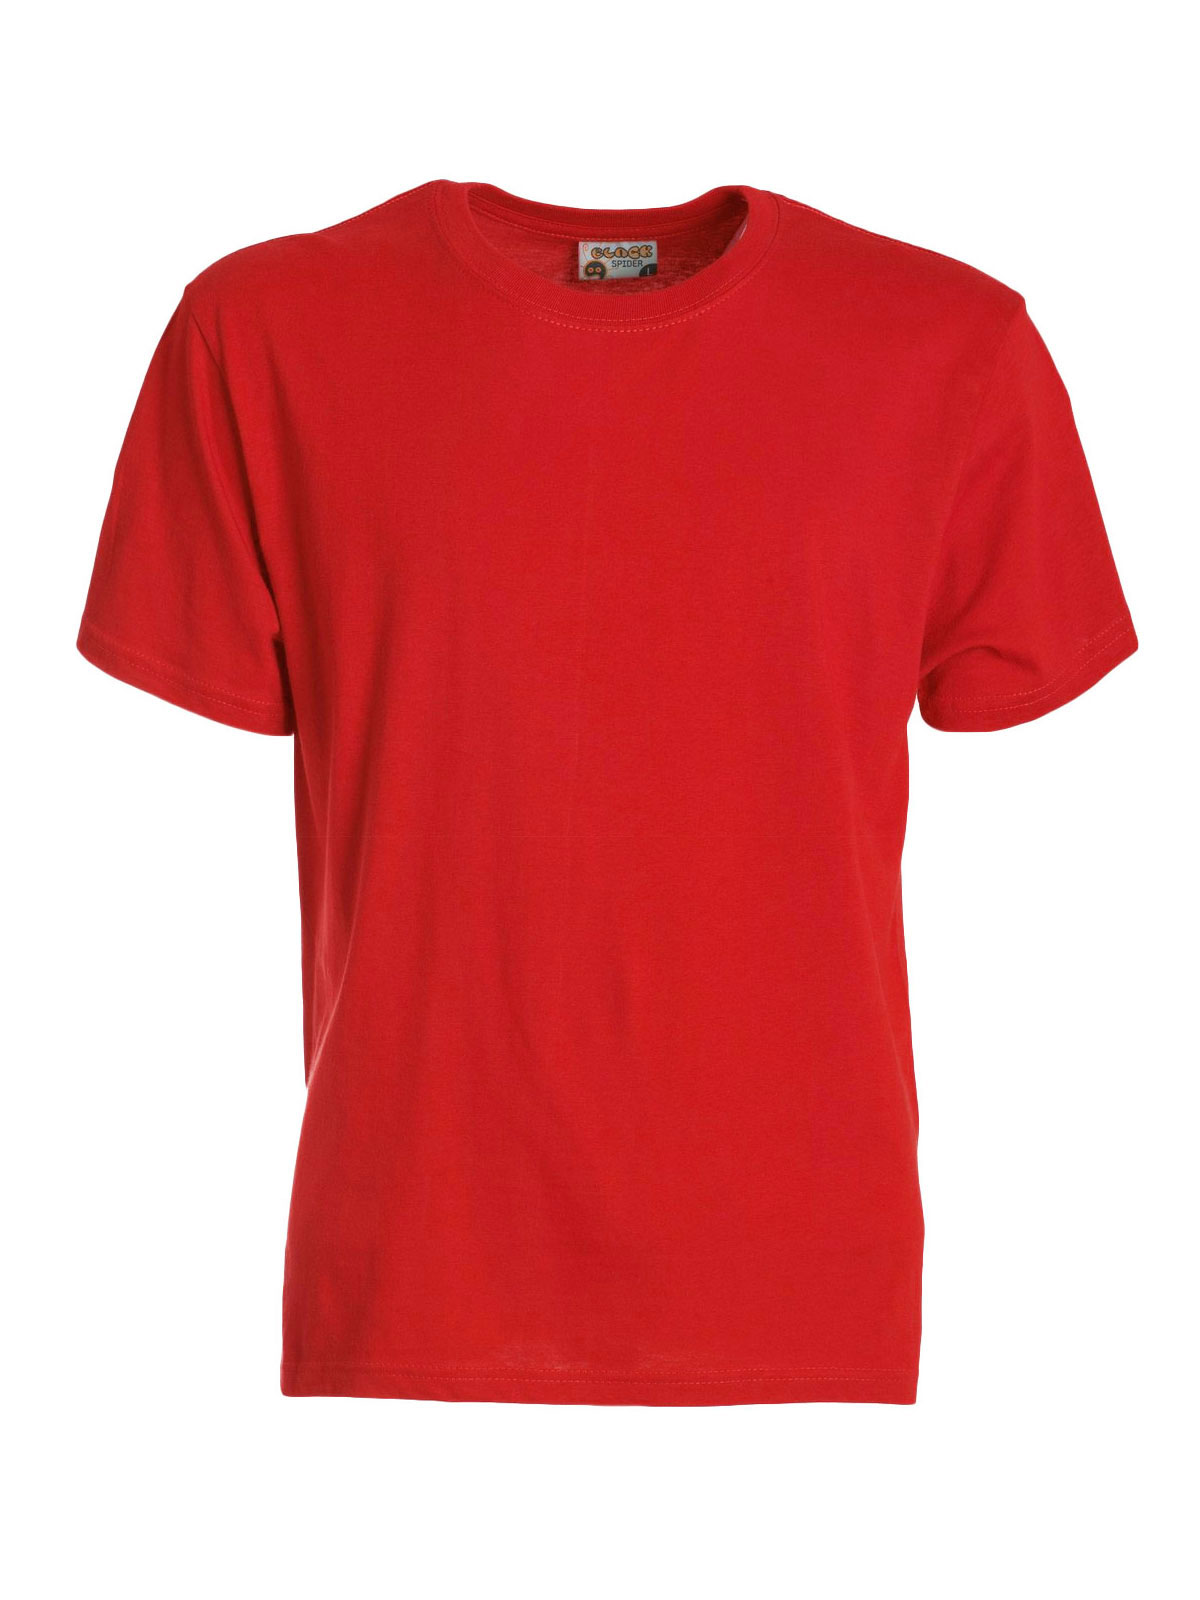 kids-classic-t-shirt-red.webp